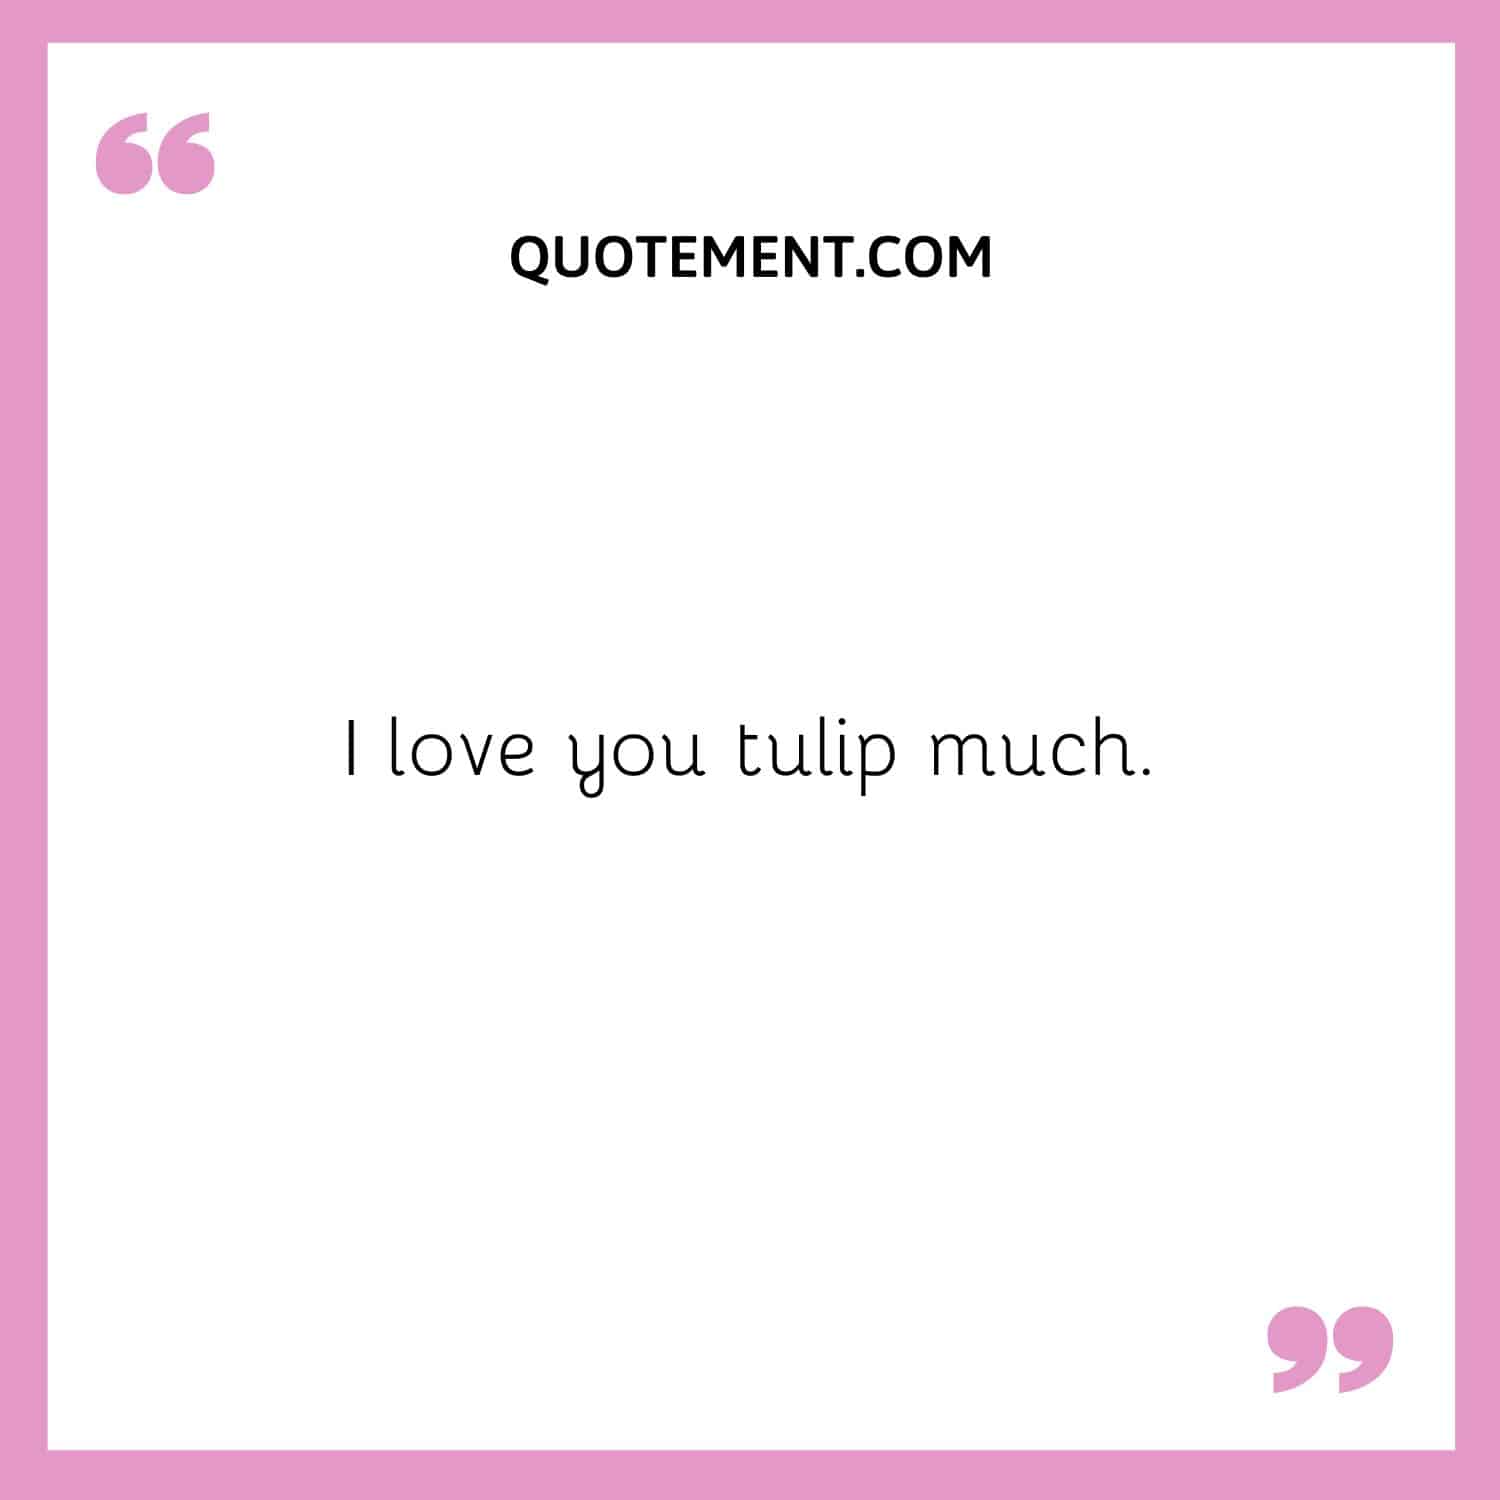 I love you tulip much